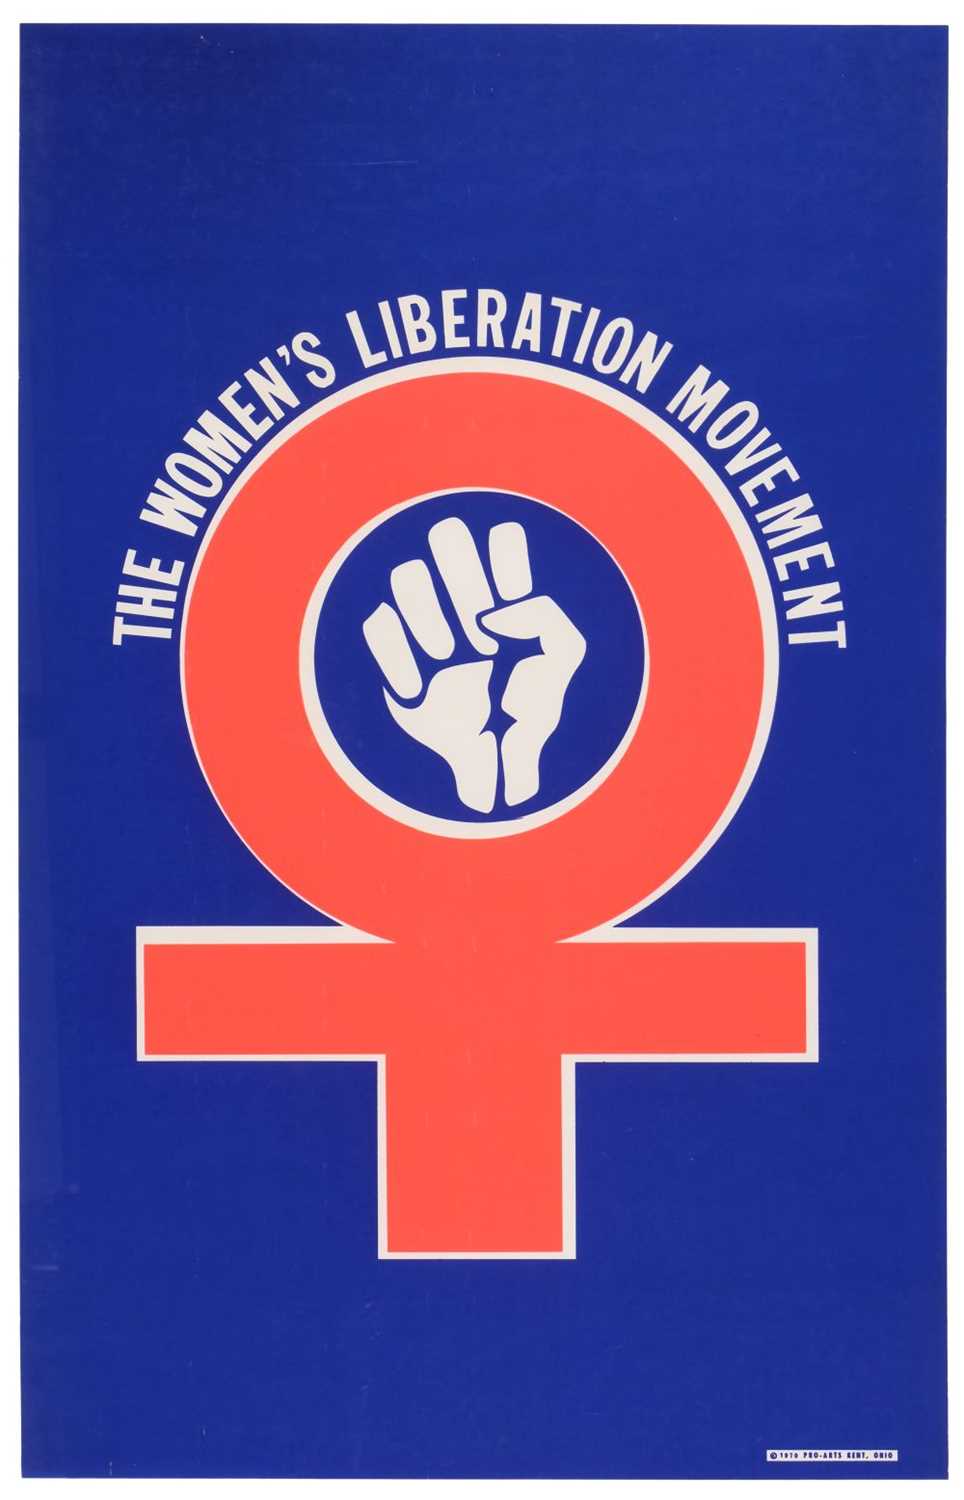 Lot 428 - Women's Liberation Poster. Women's Liberation Movement, Pro-Arts, Kent, Ohio, 1970